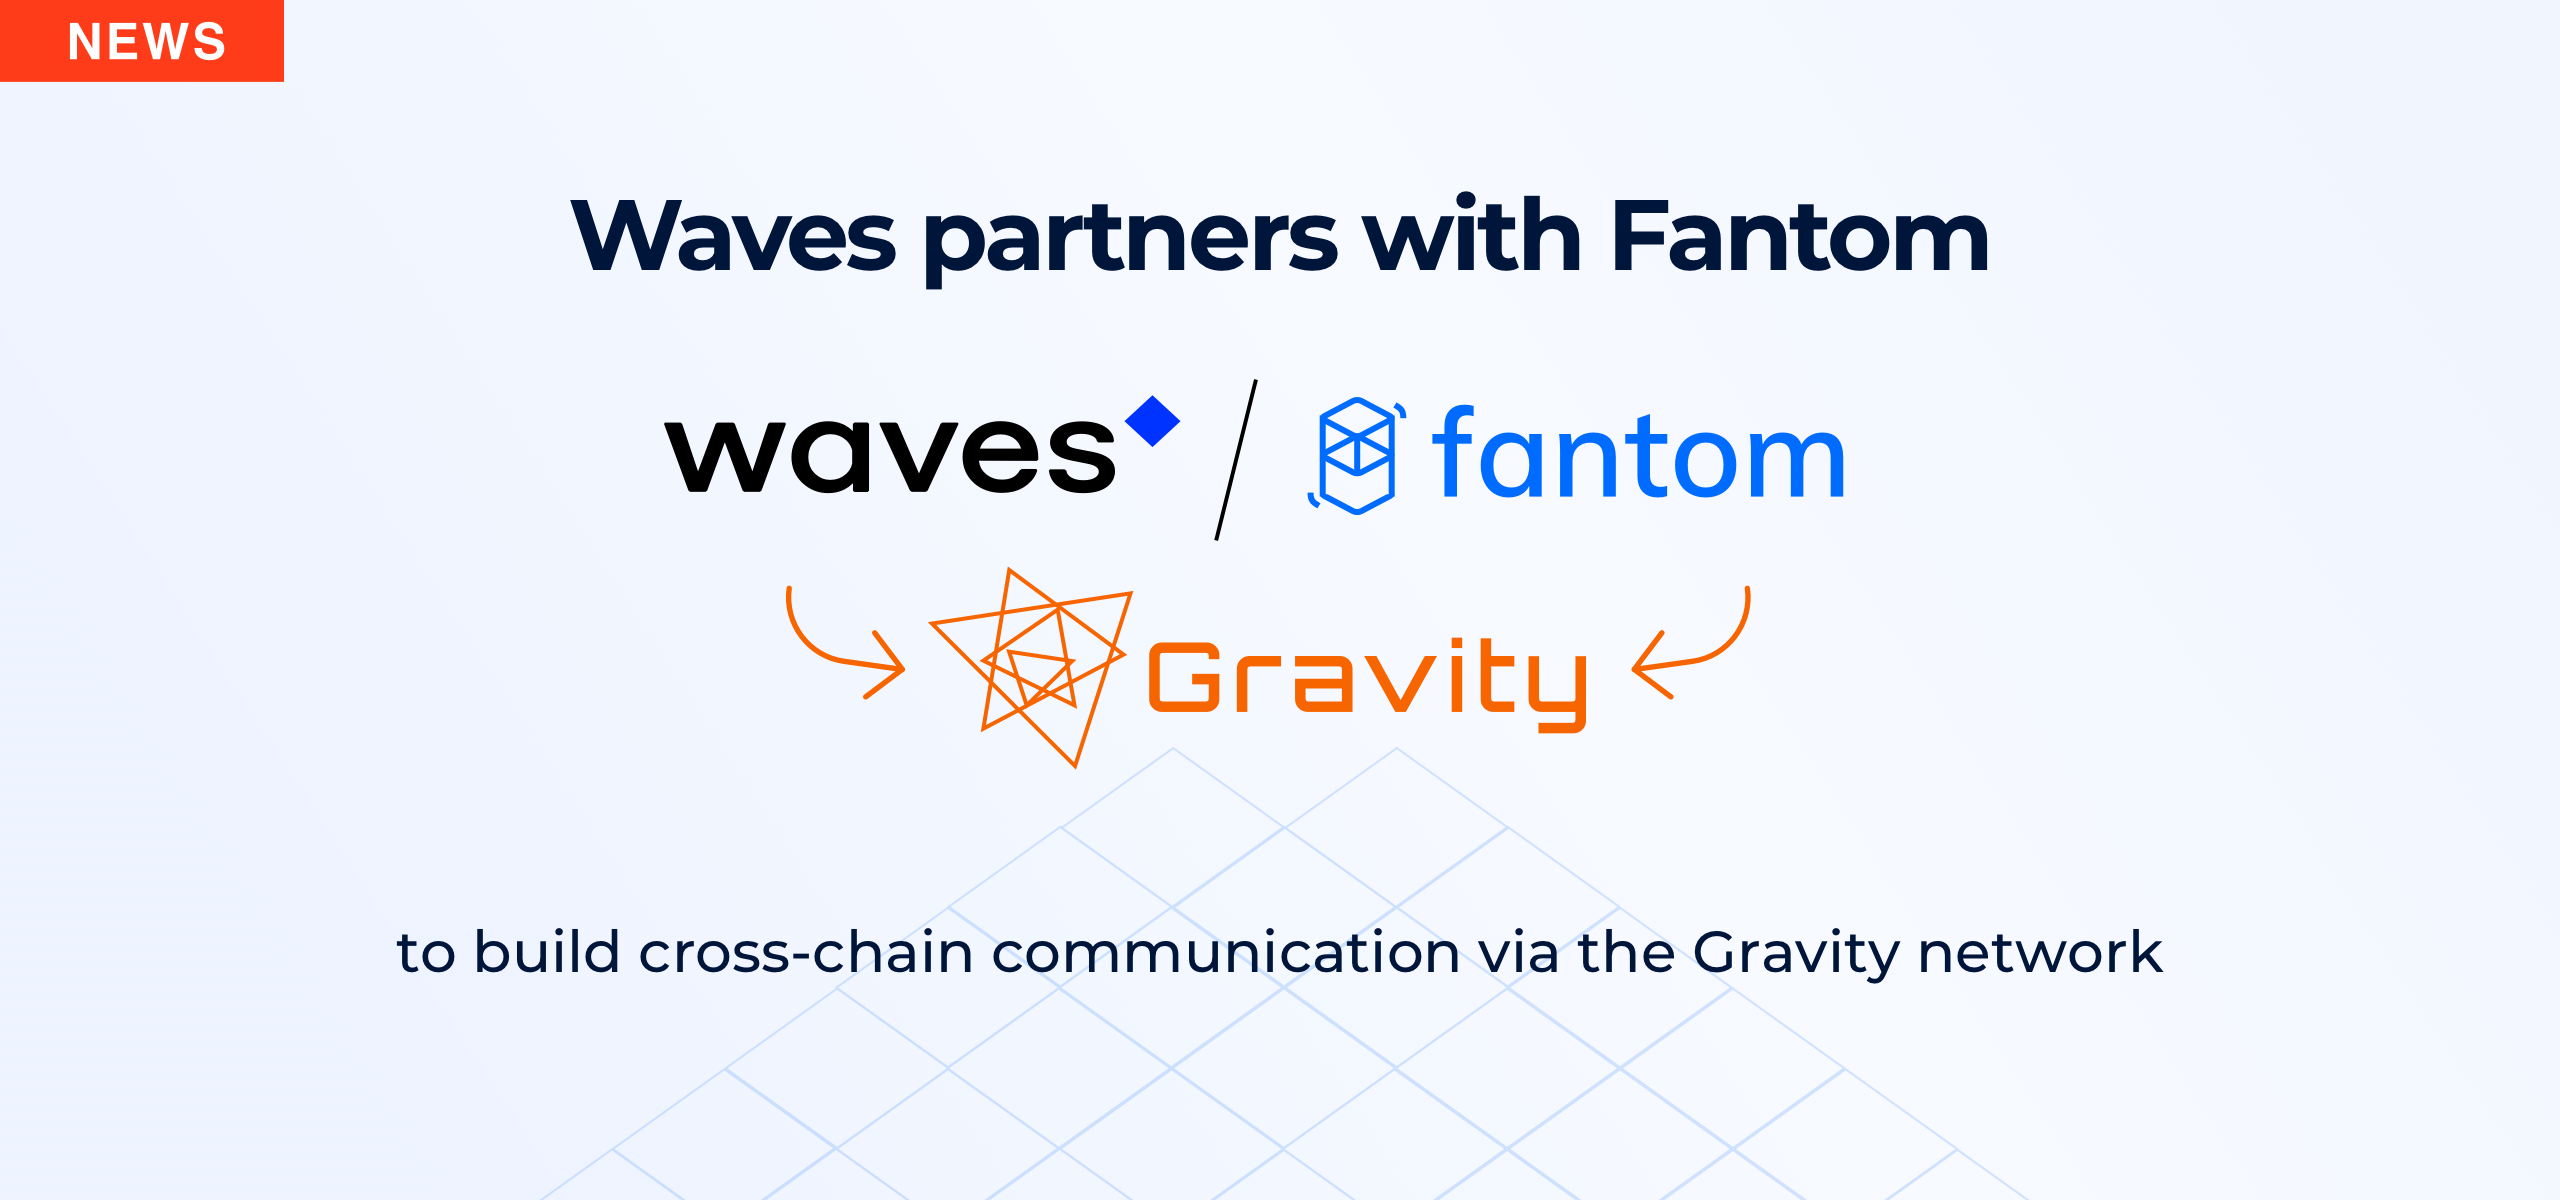 Waves, Fantom and Gravity partnership